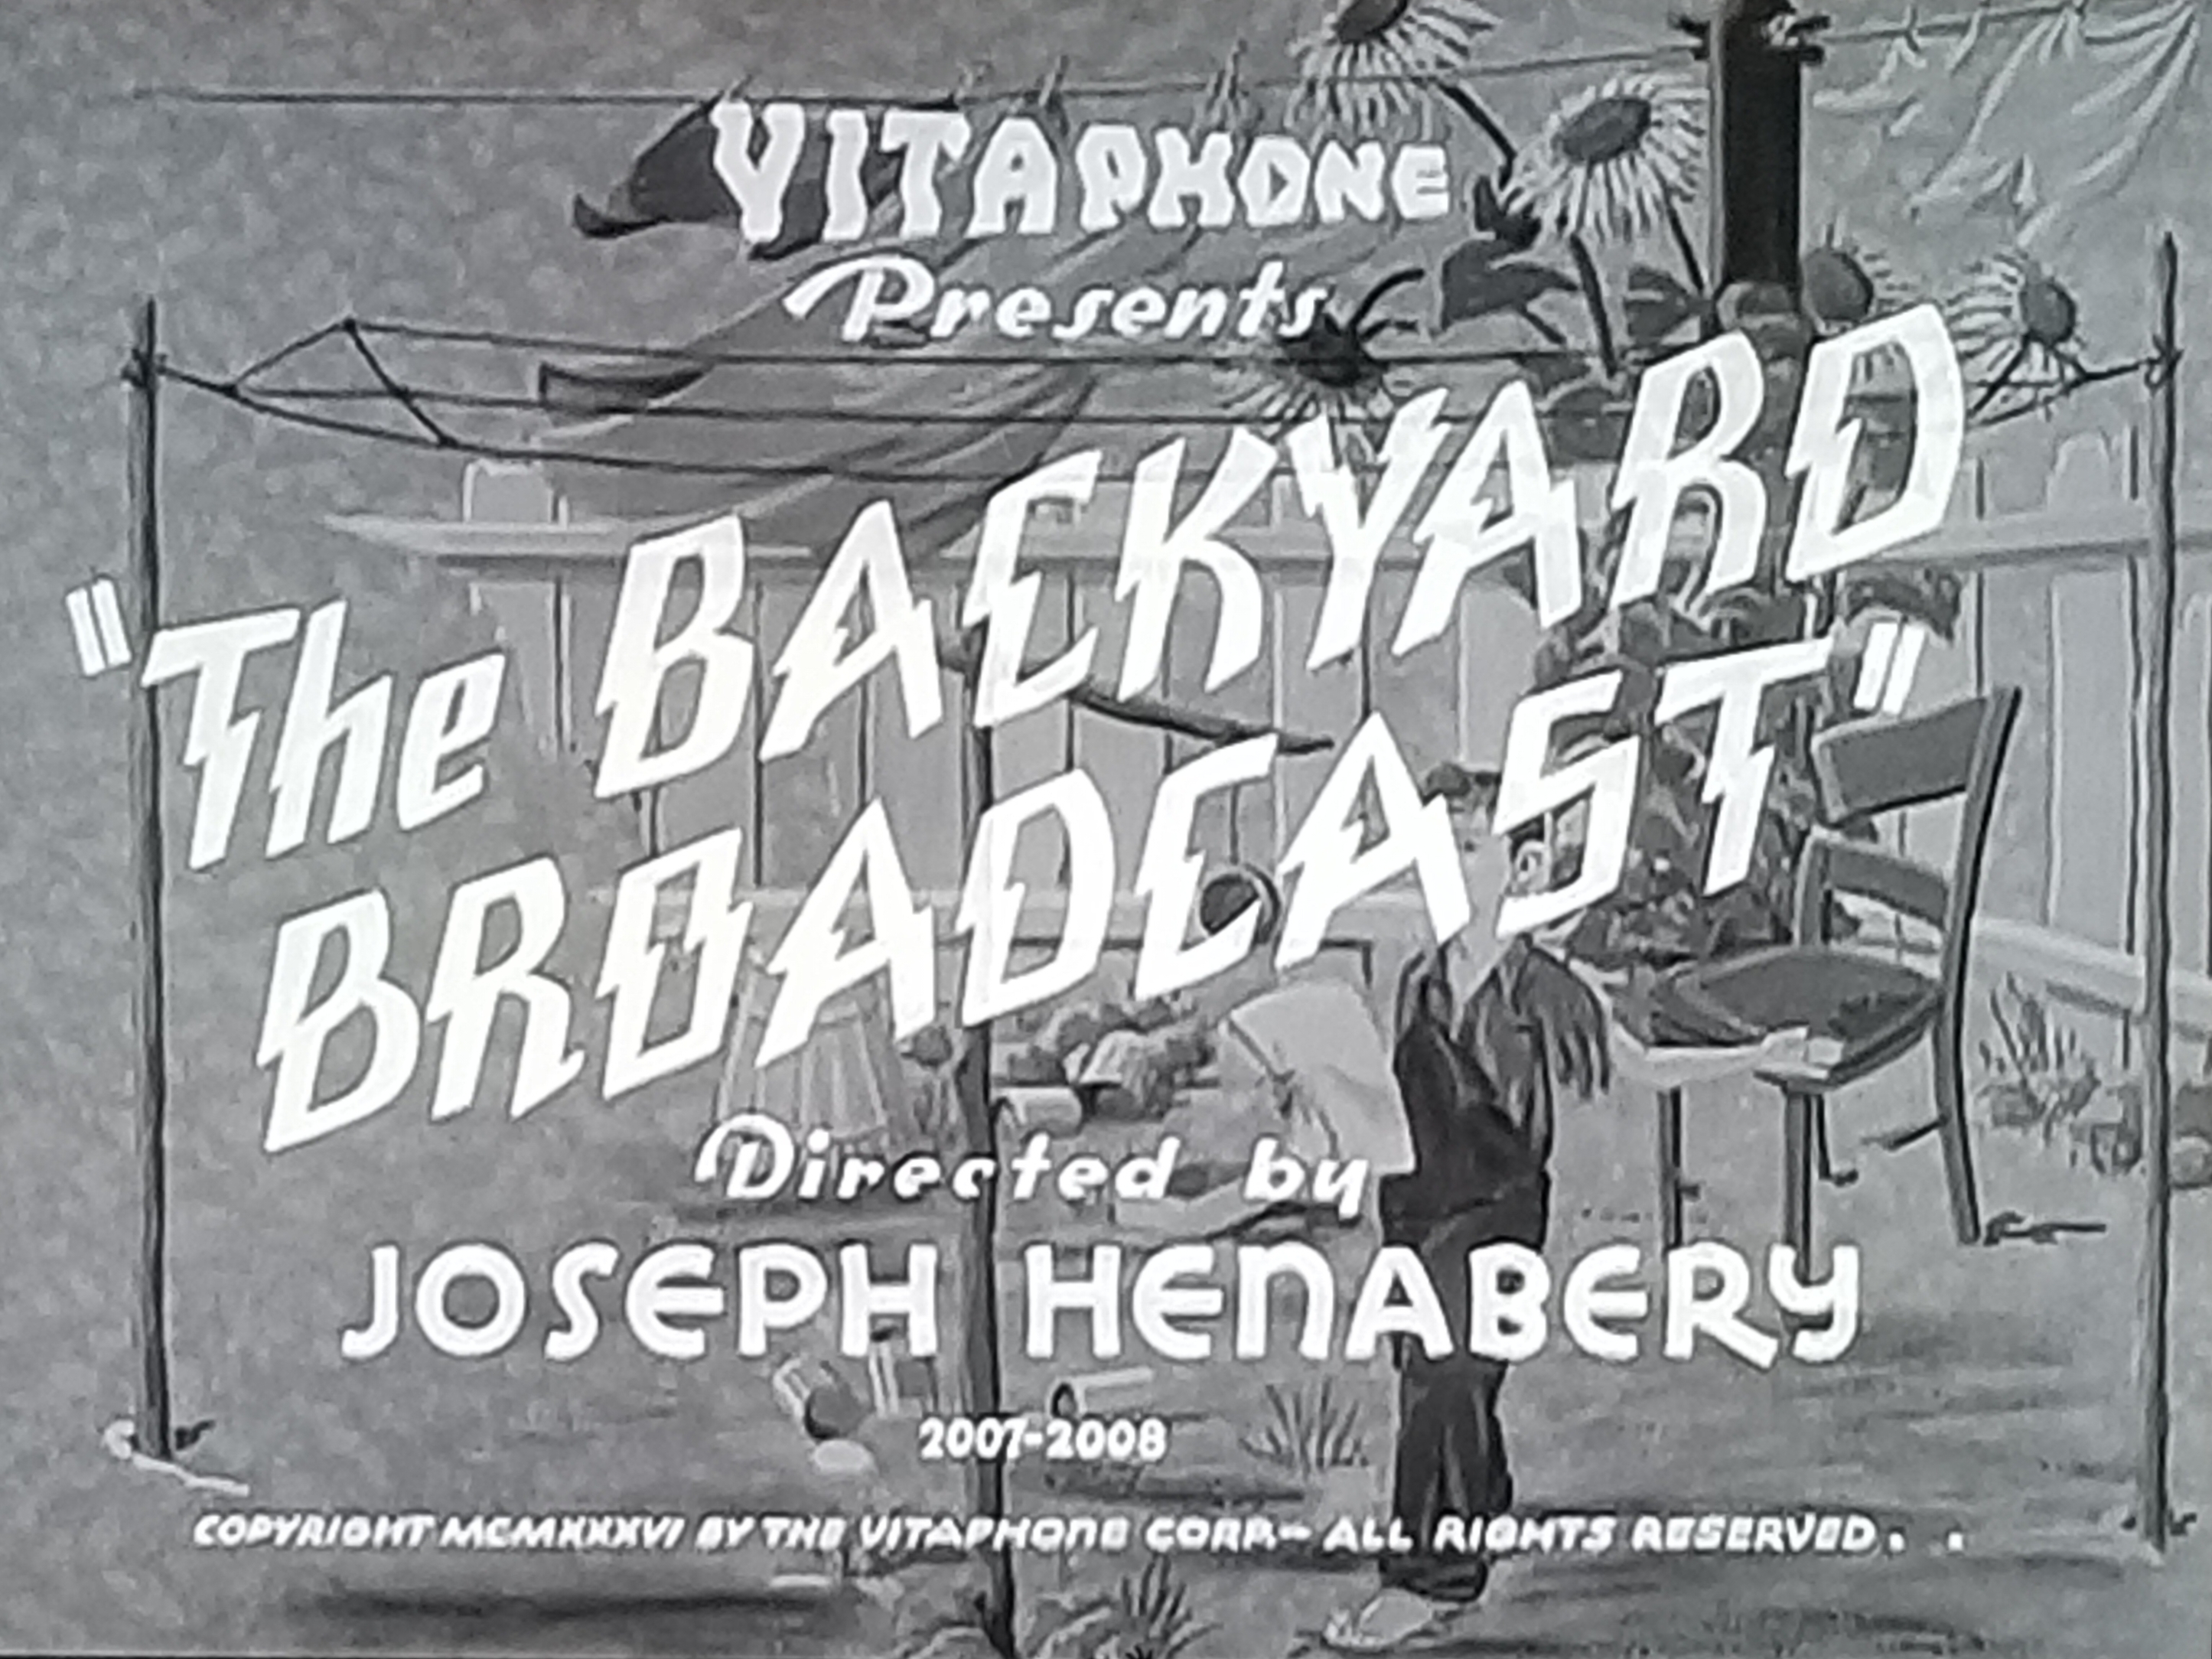 The Backyard Broadcast